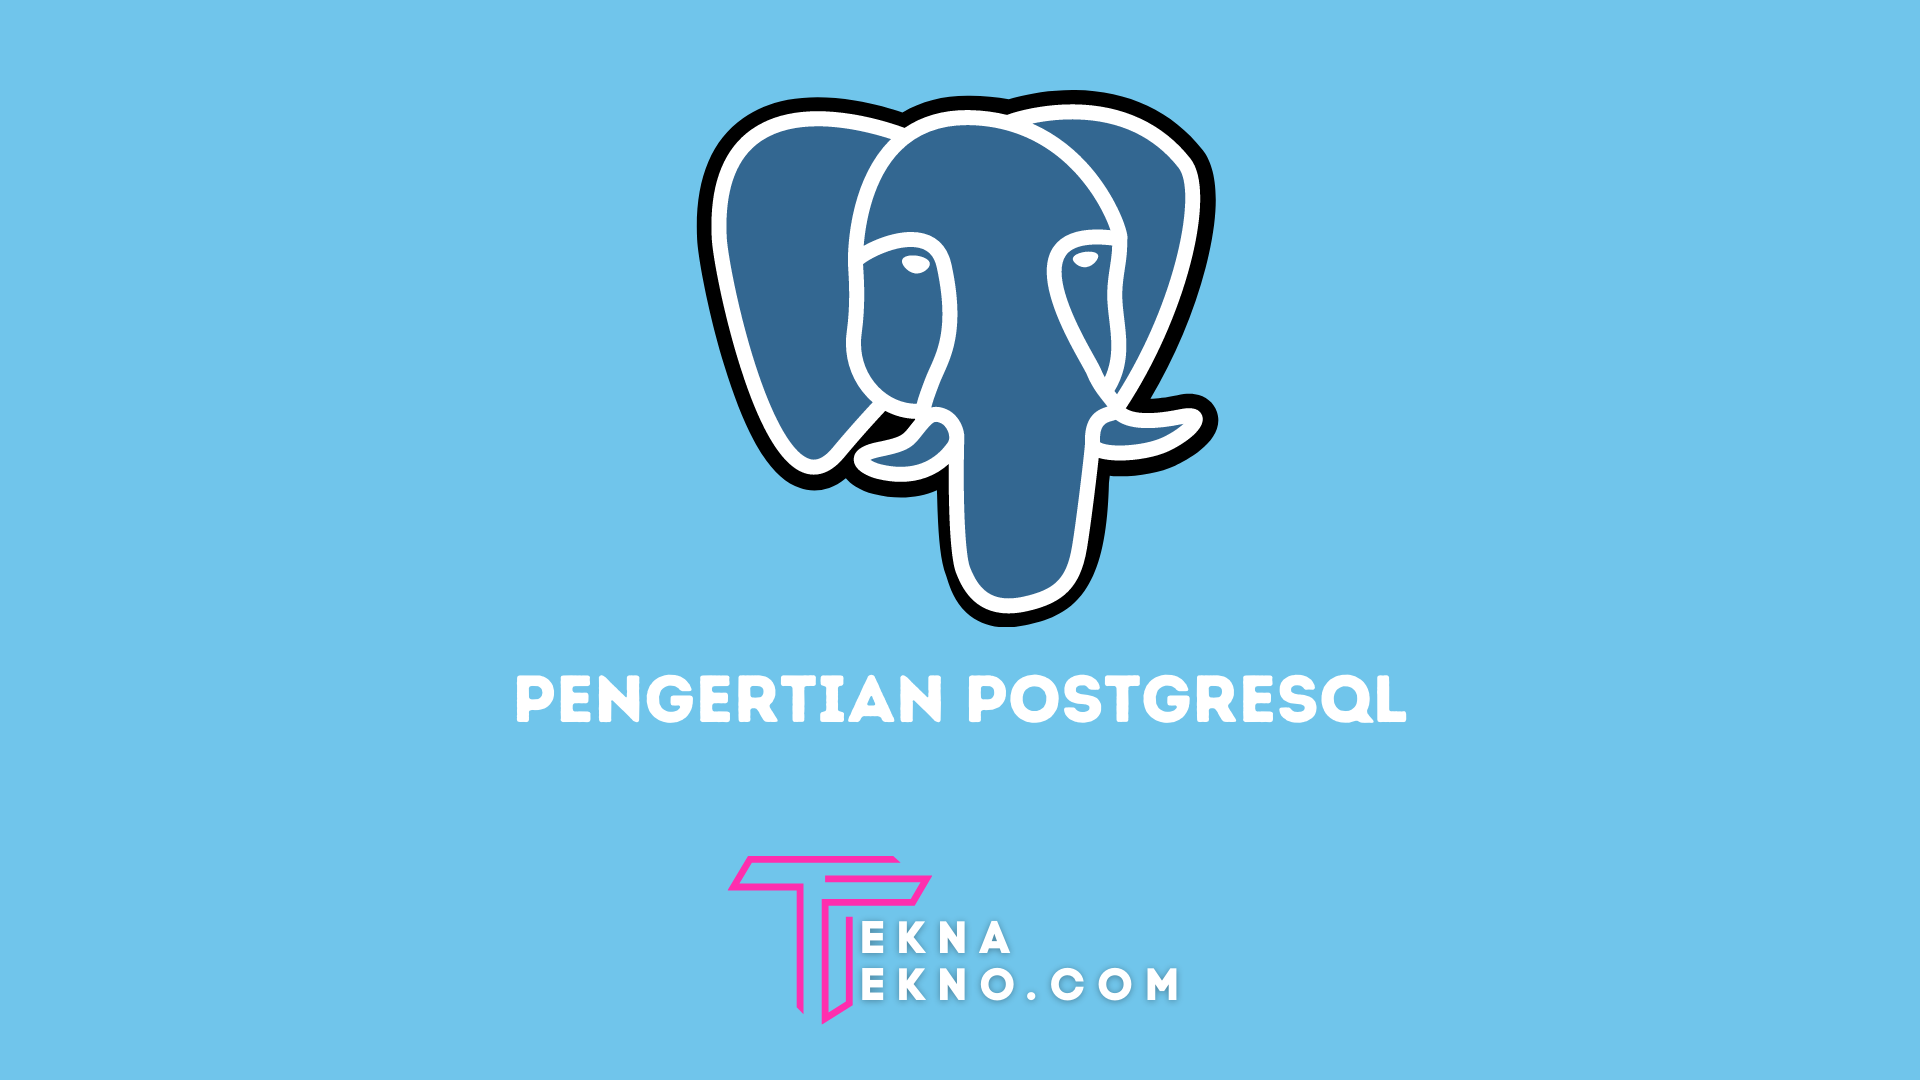 Apa itu PostgreSQL: Pengertian, Fungsi, Kelebihan dan Kekurangannya